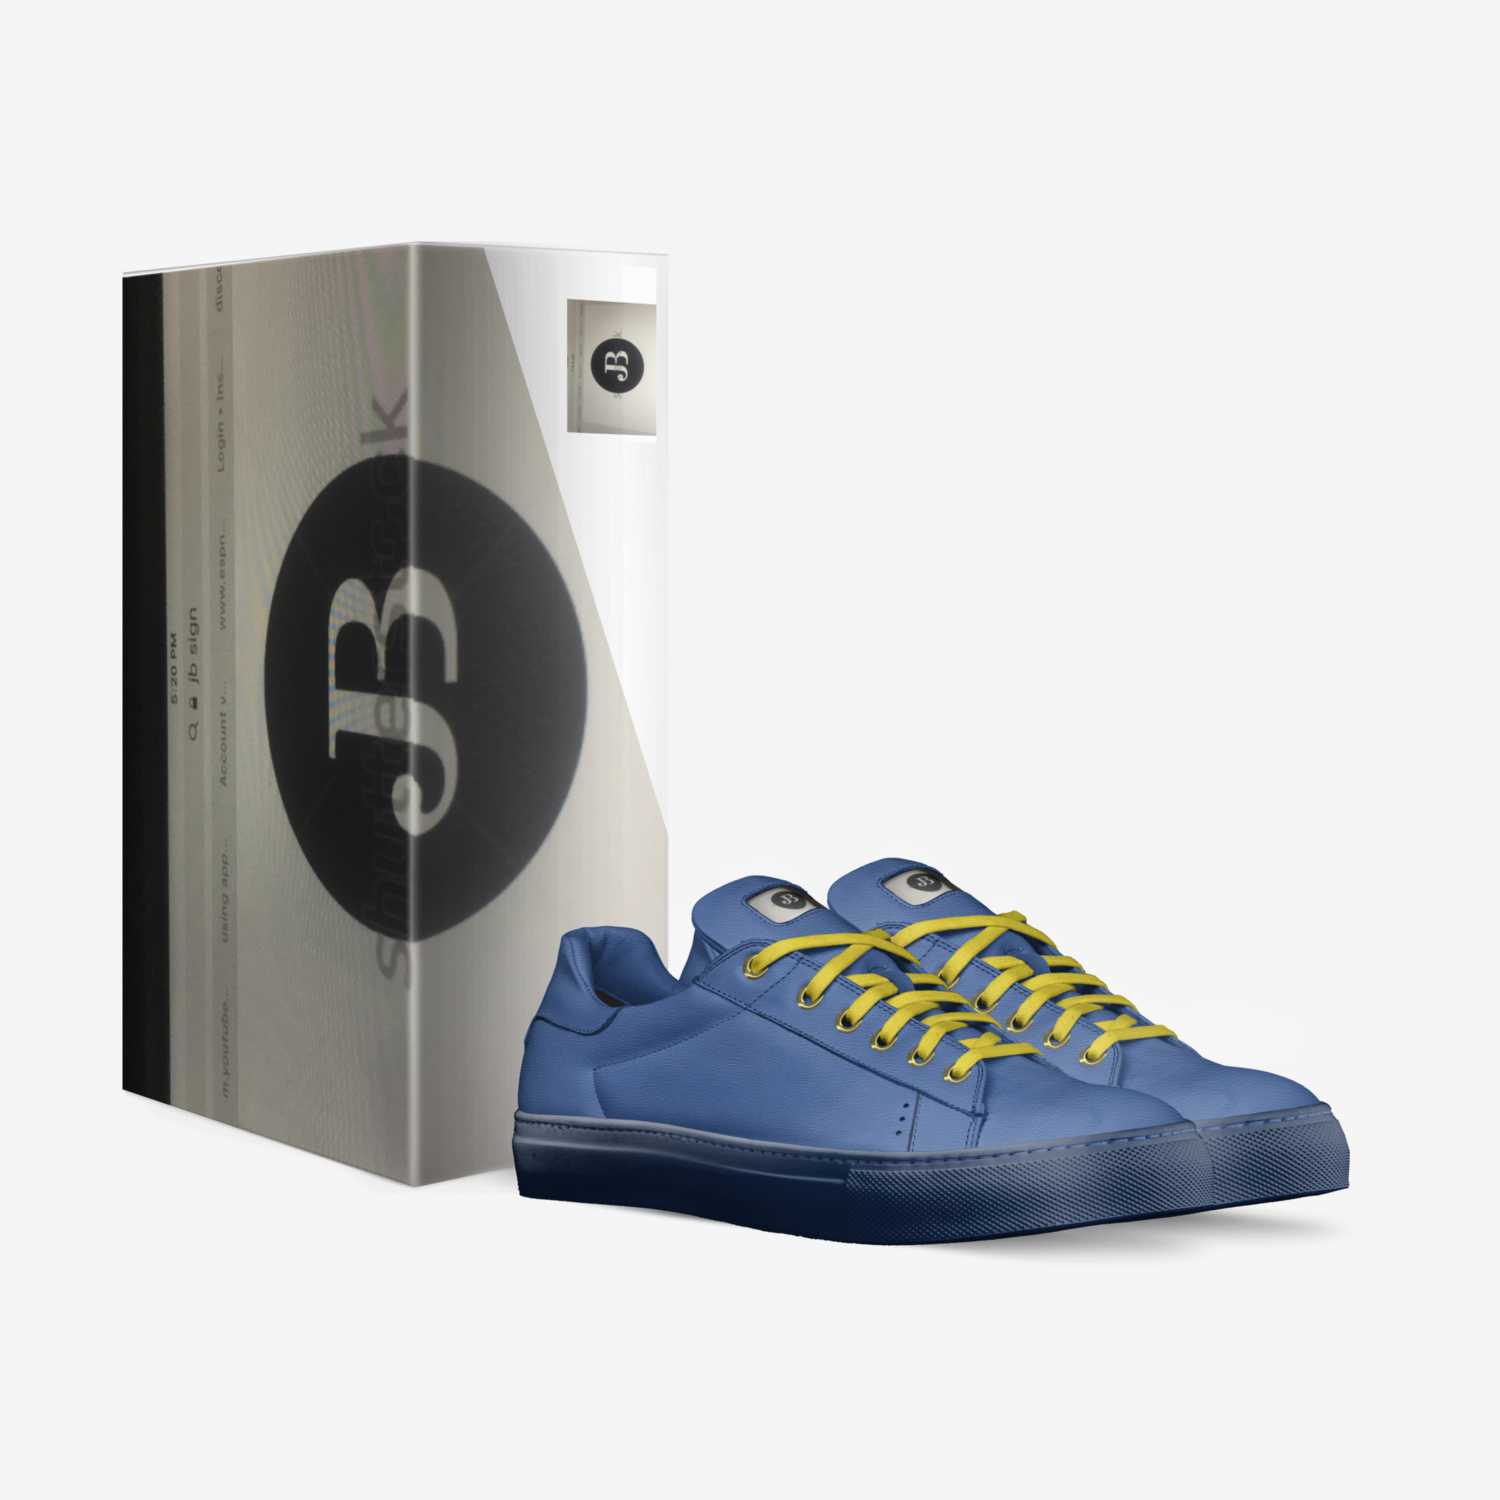 Buchanan 1's custom made in Italy shoes by Justin Buchanan | Box view